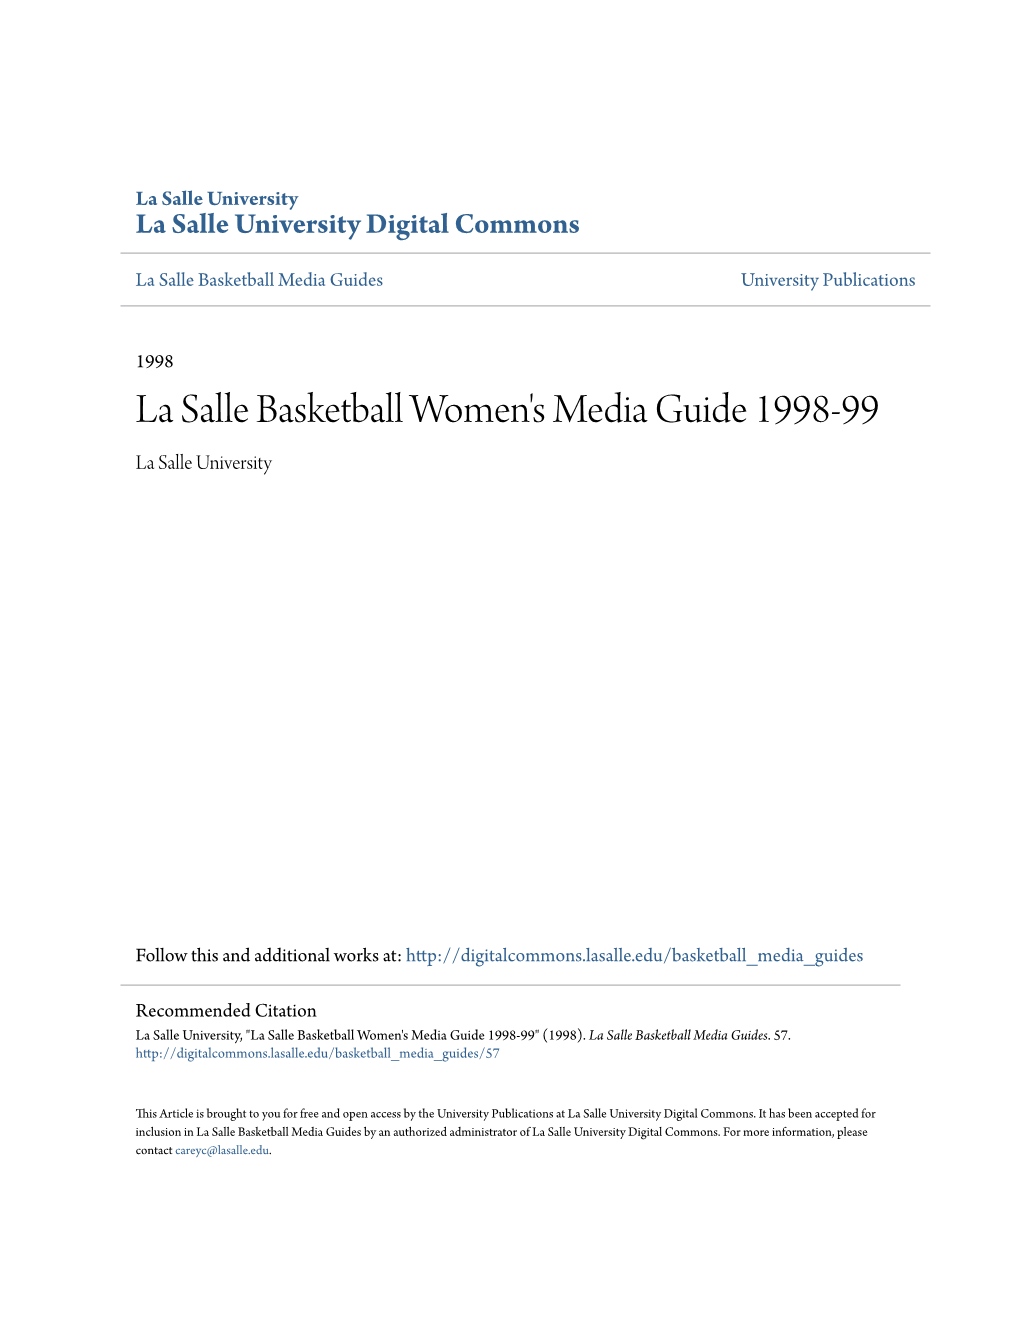 La Salle Basketball Women's Media Guide 1998-99 La Salle University